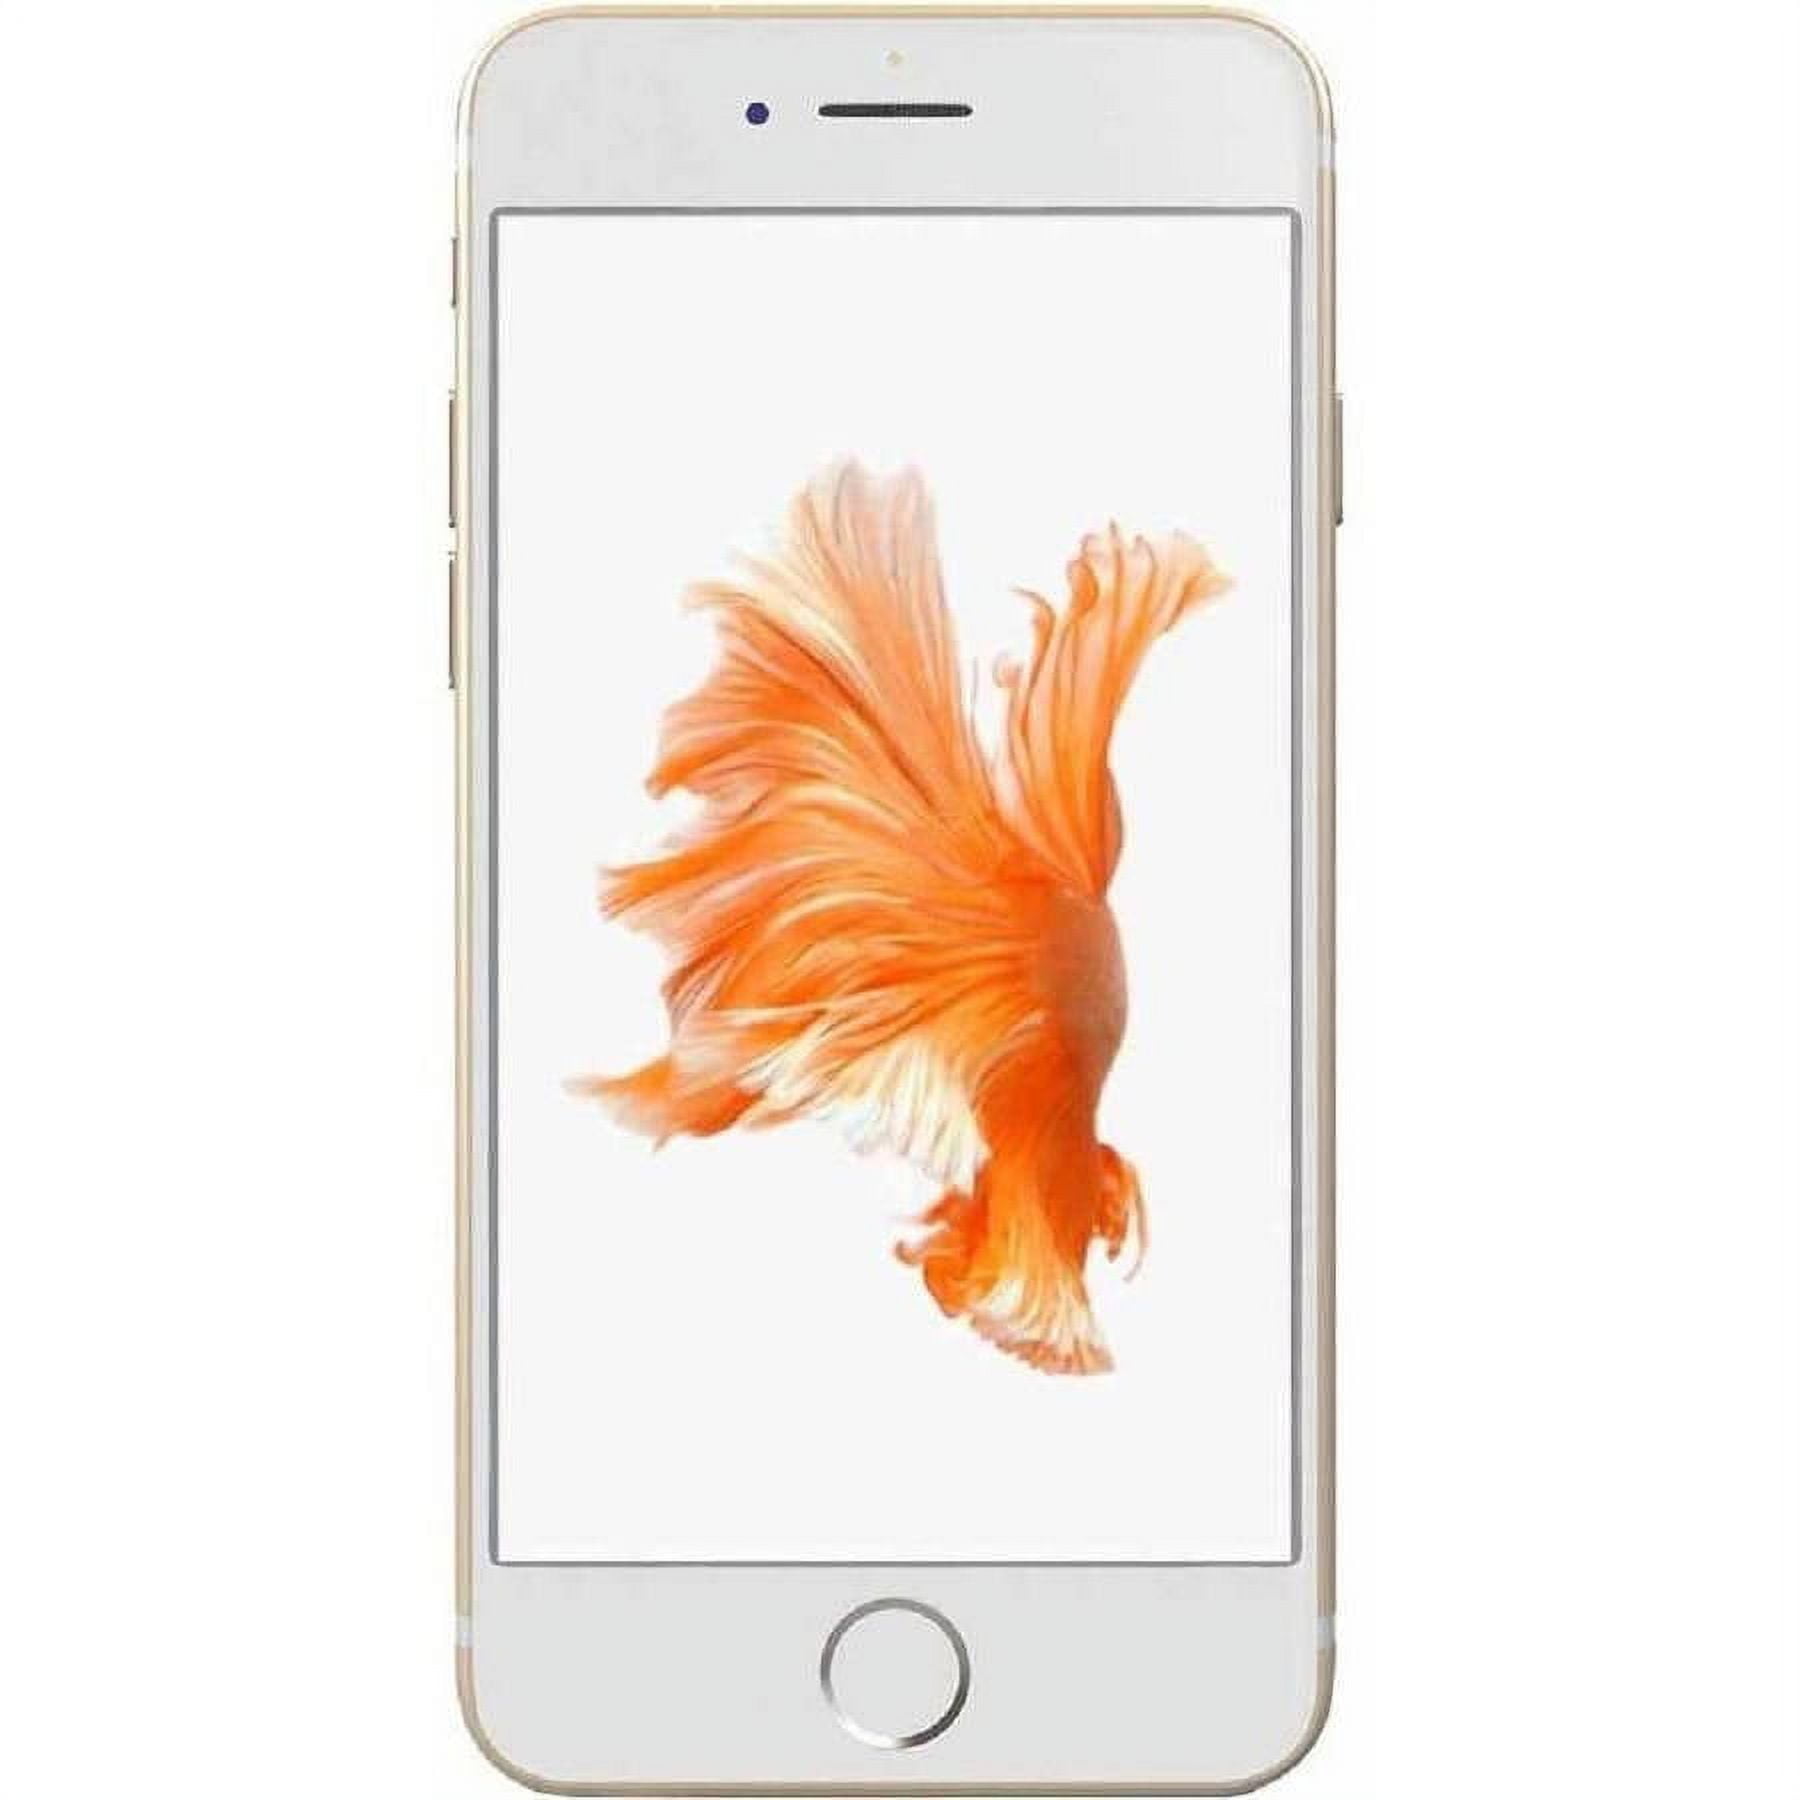 Restored Apple iPhone 6s 32GB, Gold - Unlocked GSM (Refurbished)